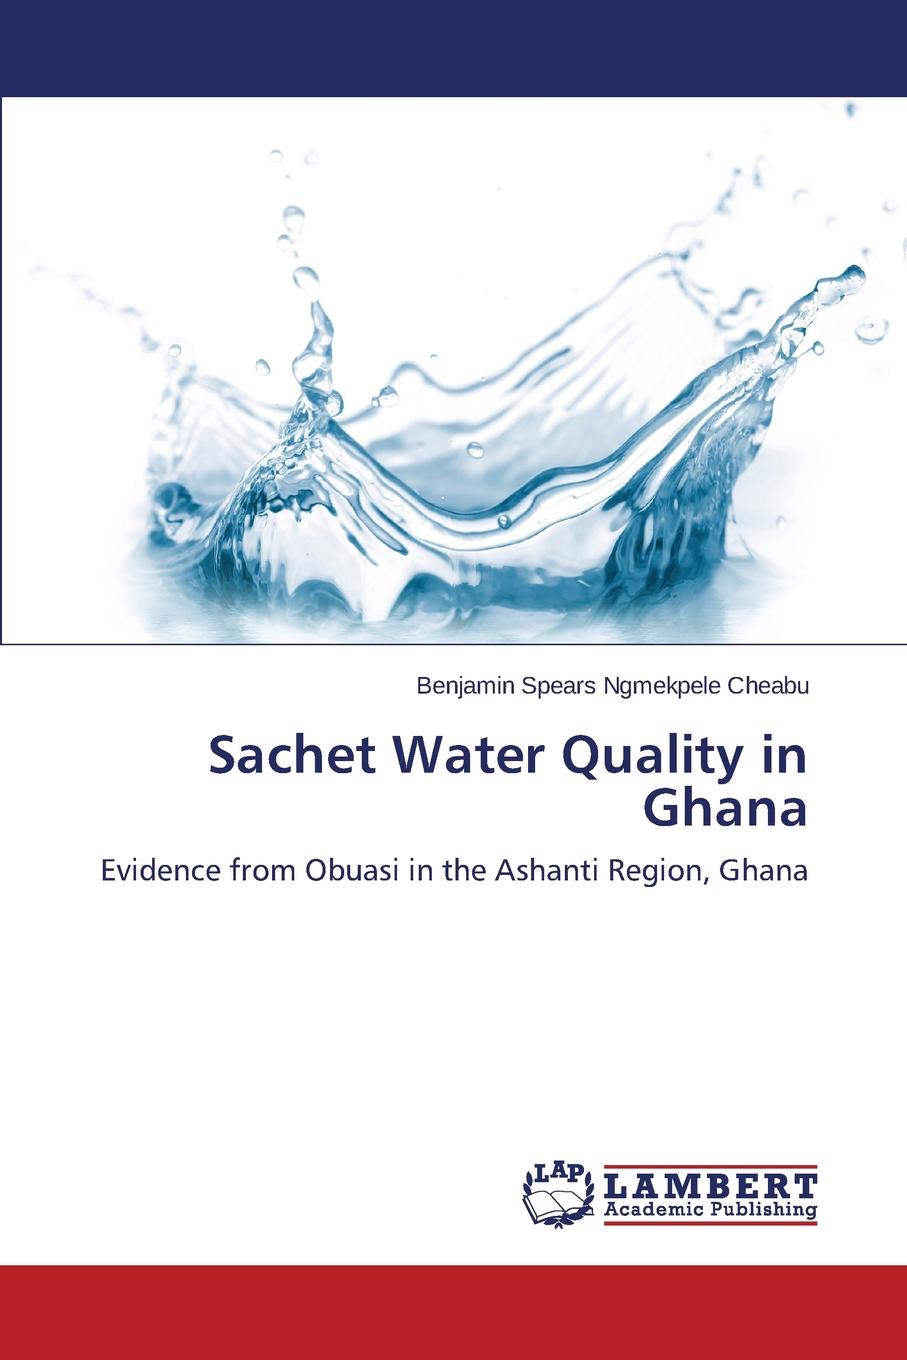 Cheabu Benjamin Spears Ngmekpele Sachet Water Quality in Ghana